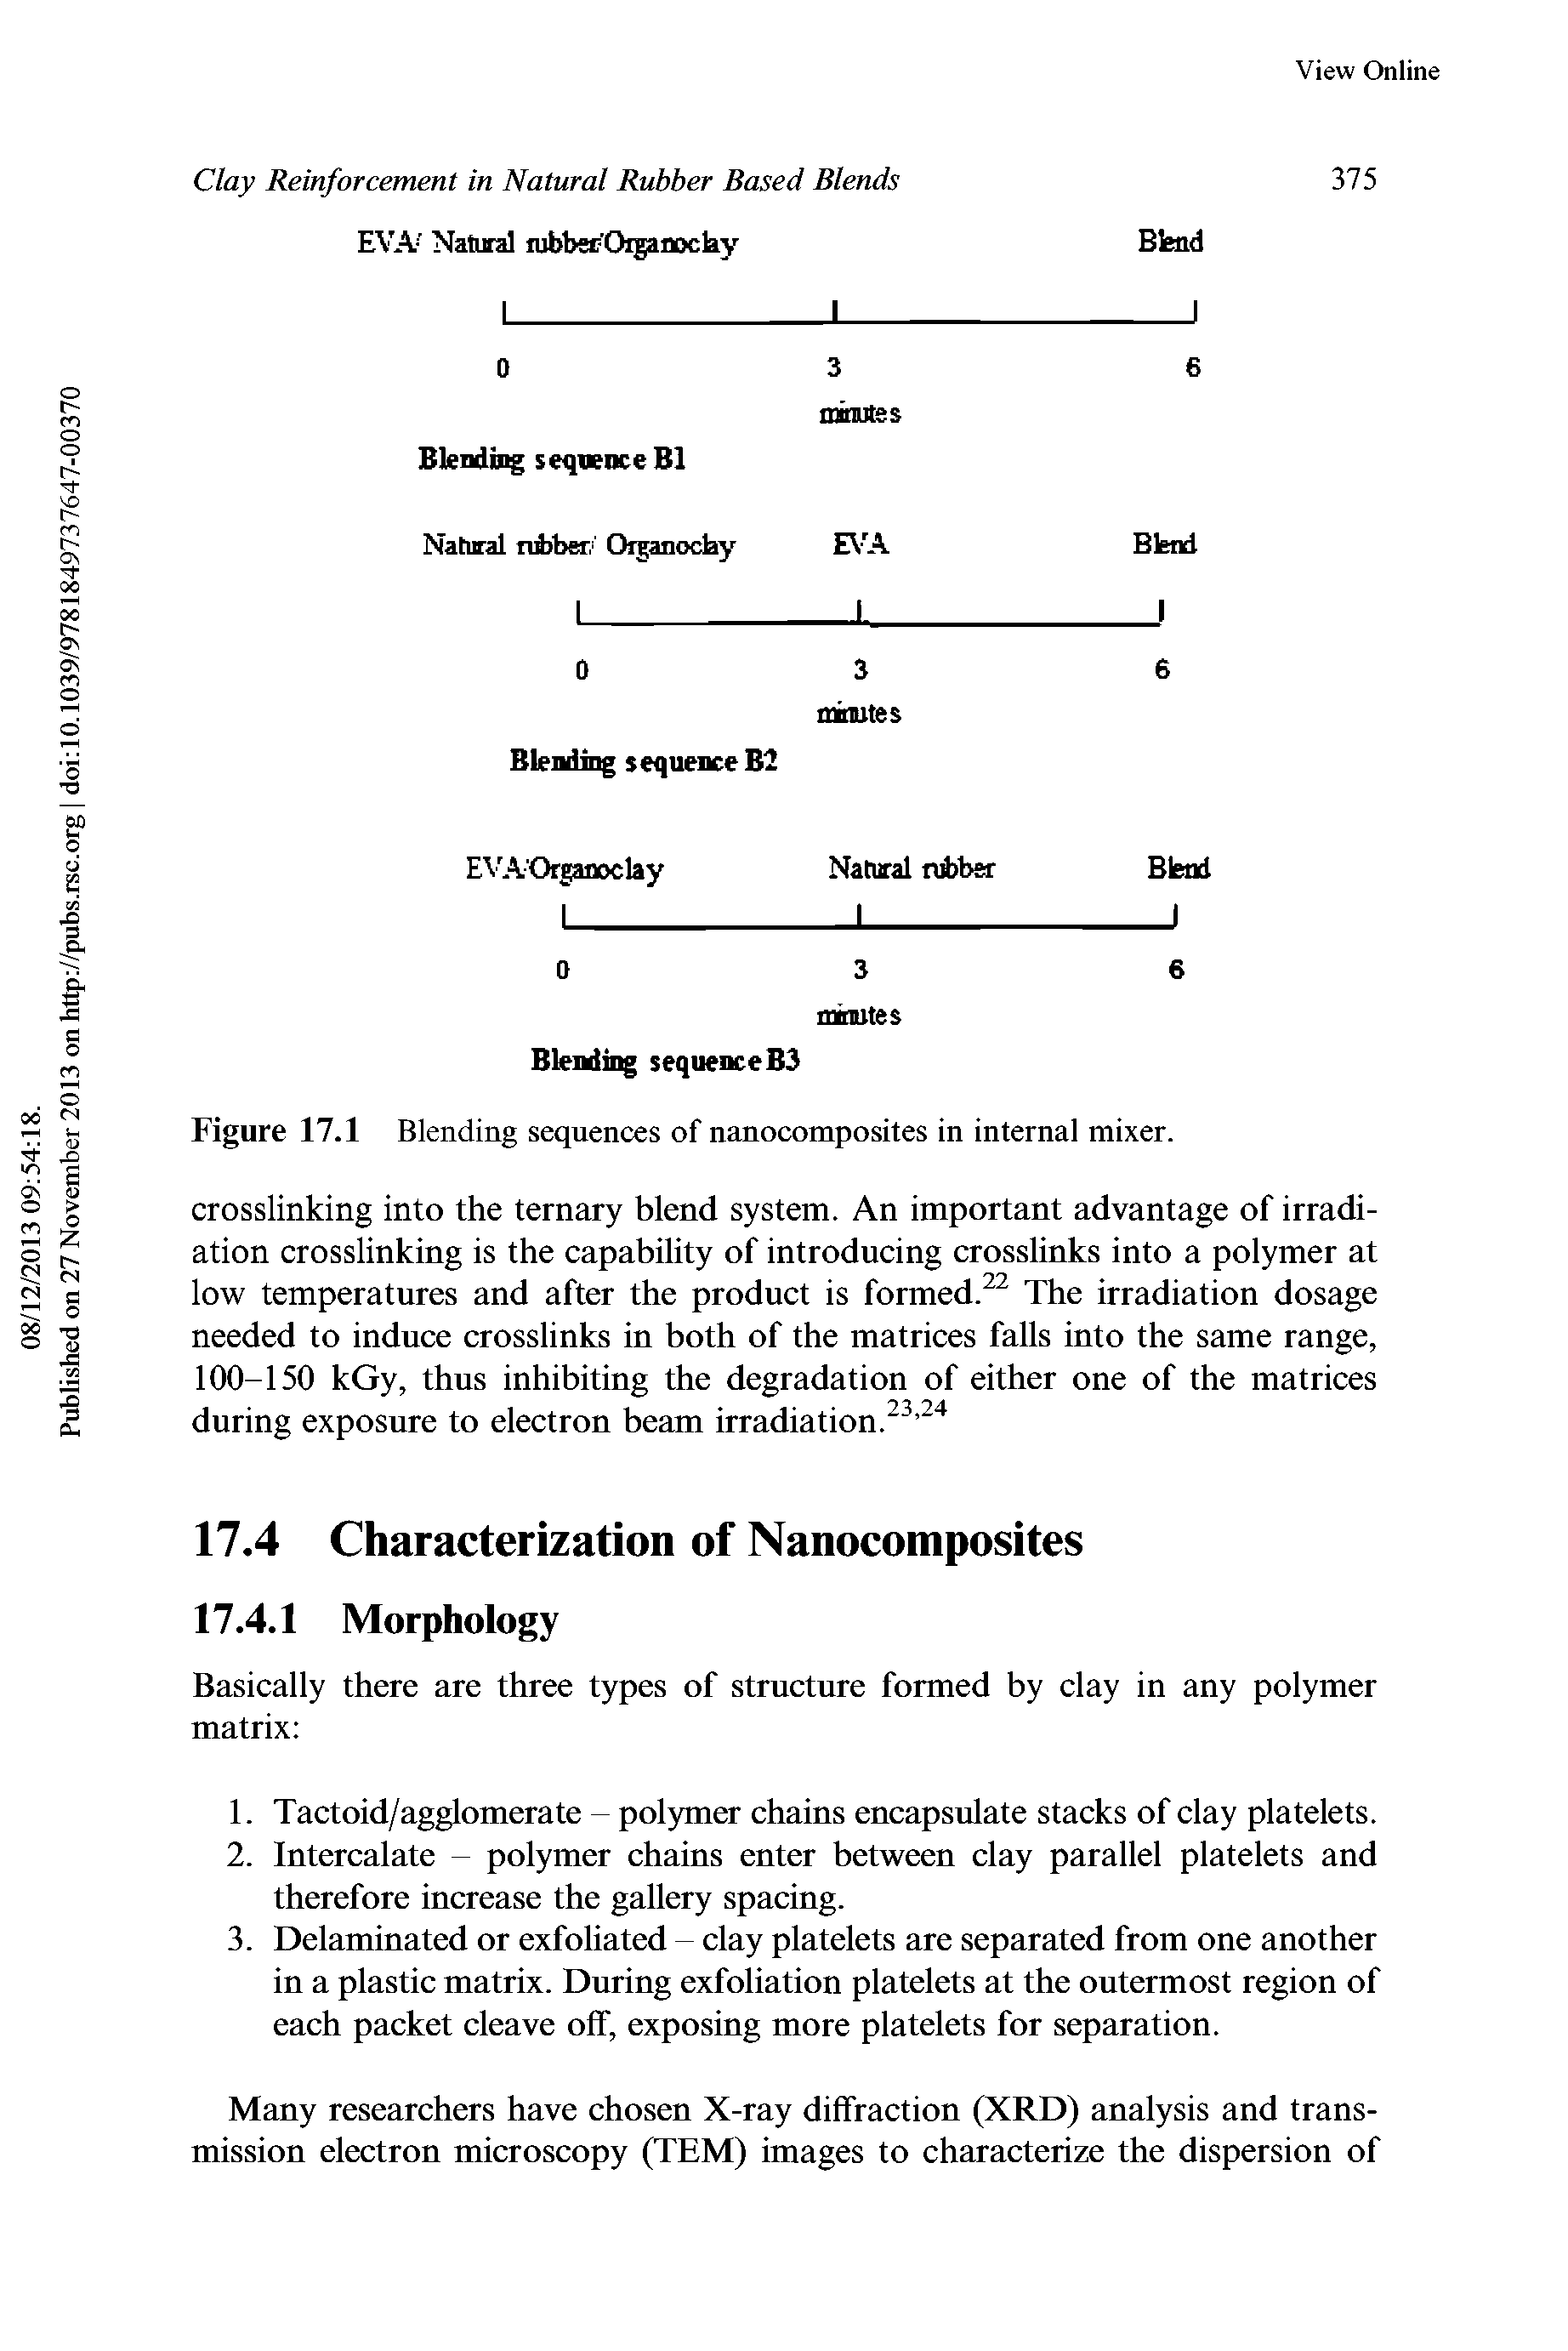 Figure 17.1 Blending sequences of nanocomposites in internal mixer.